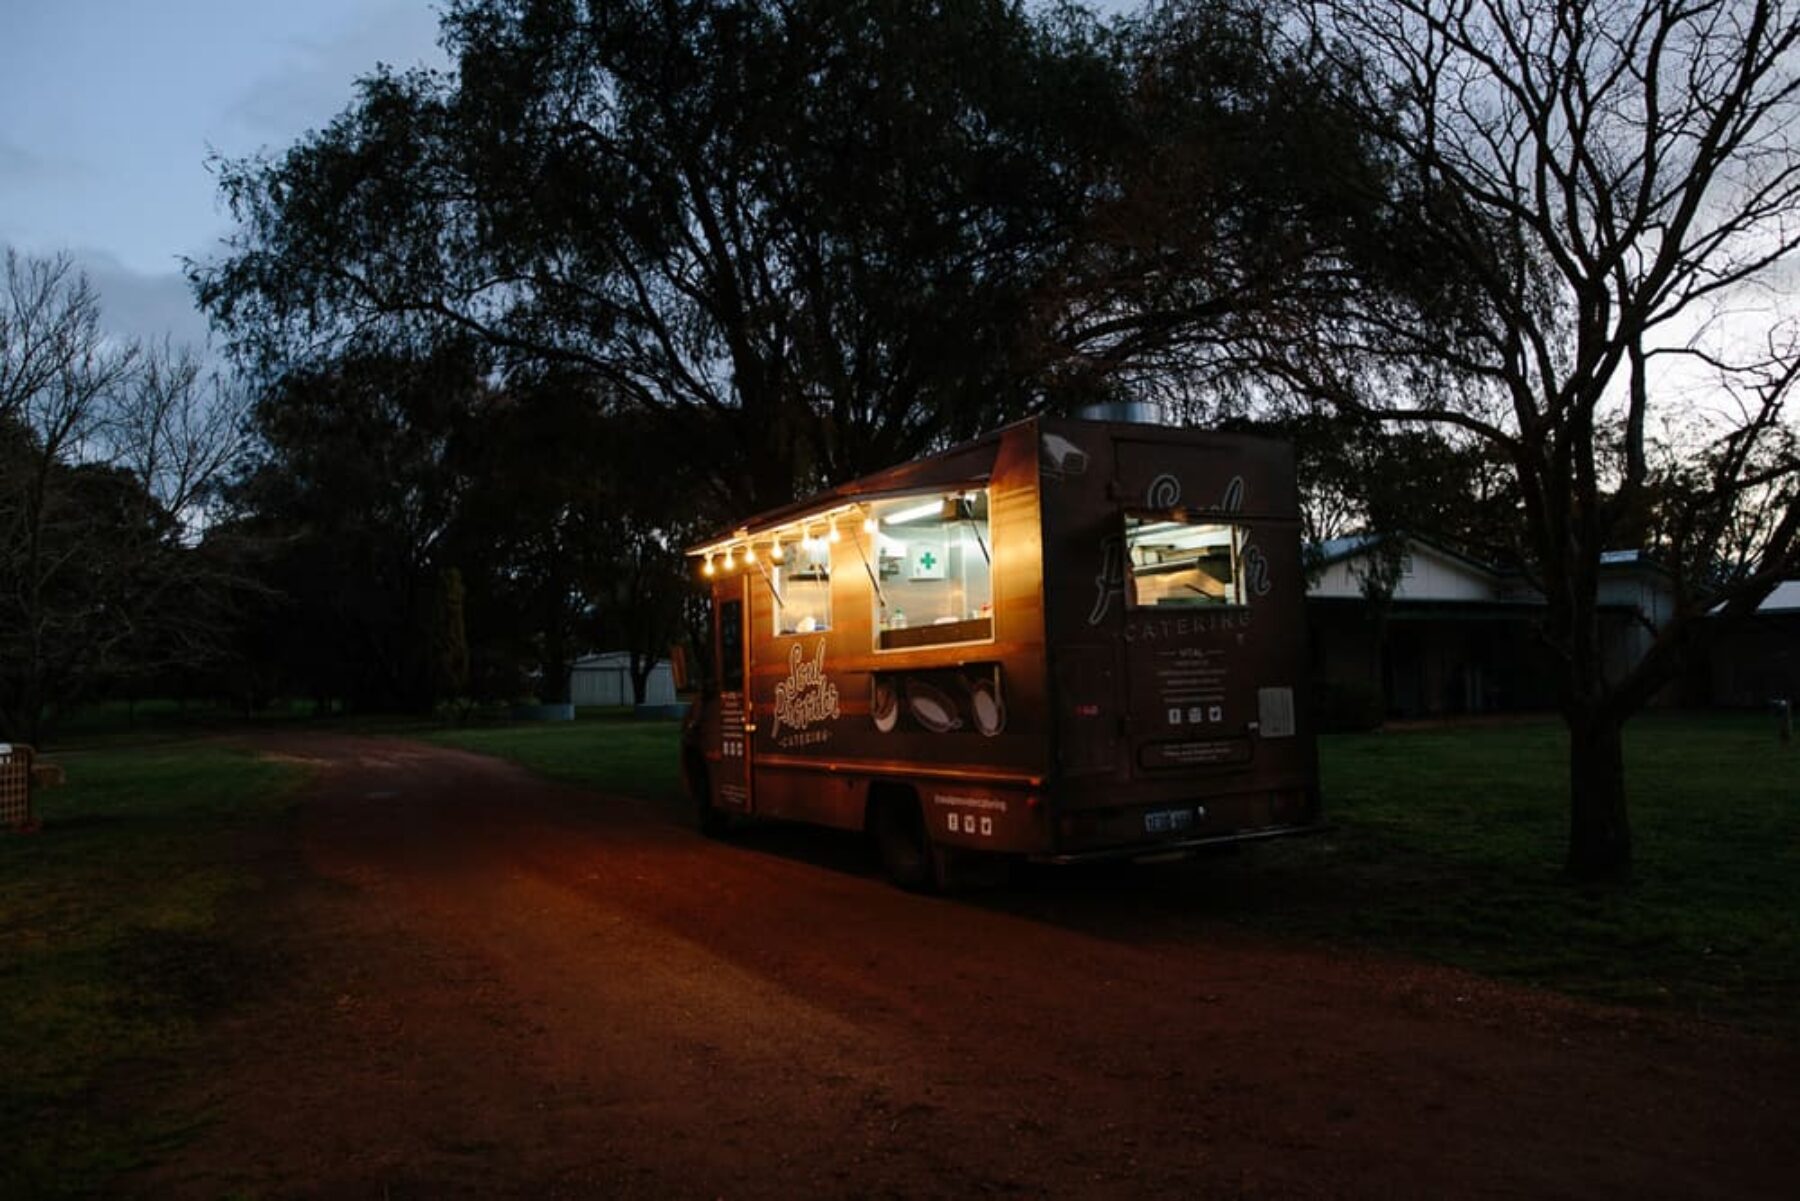 Perth food truck - Soul Provider